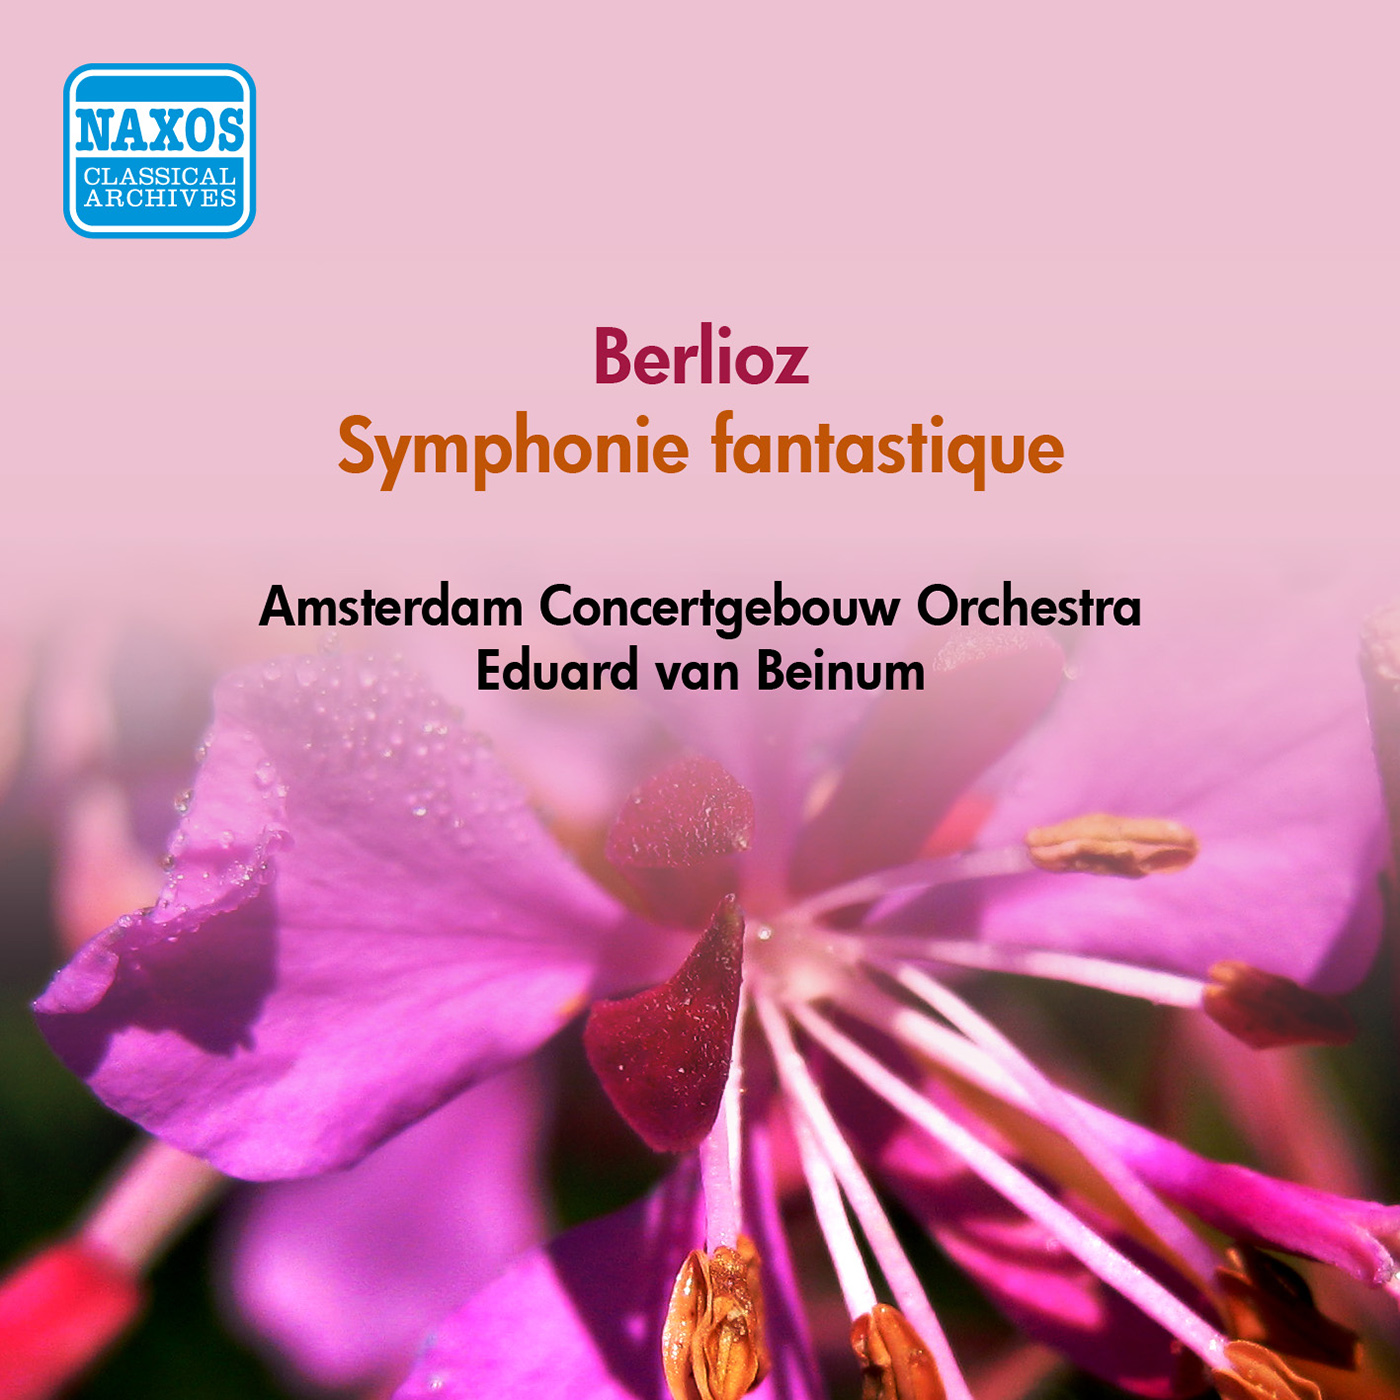 Symphonie fantastique, Op. 14:I. Reveries: Largo - Passions: Allegro agitato e appassionato assai